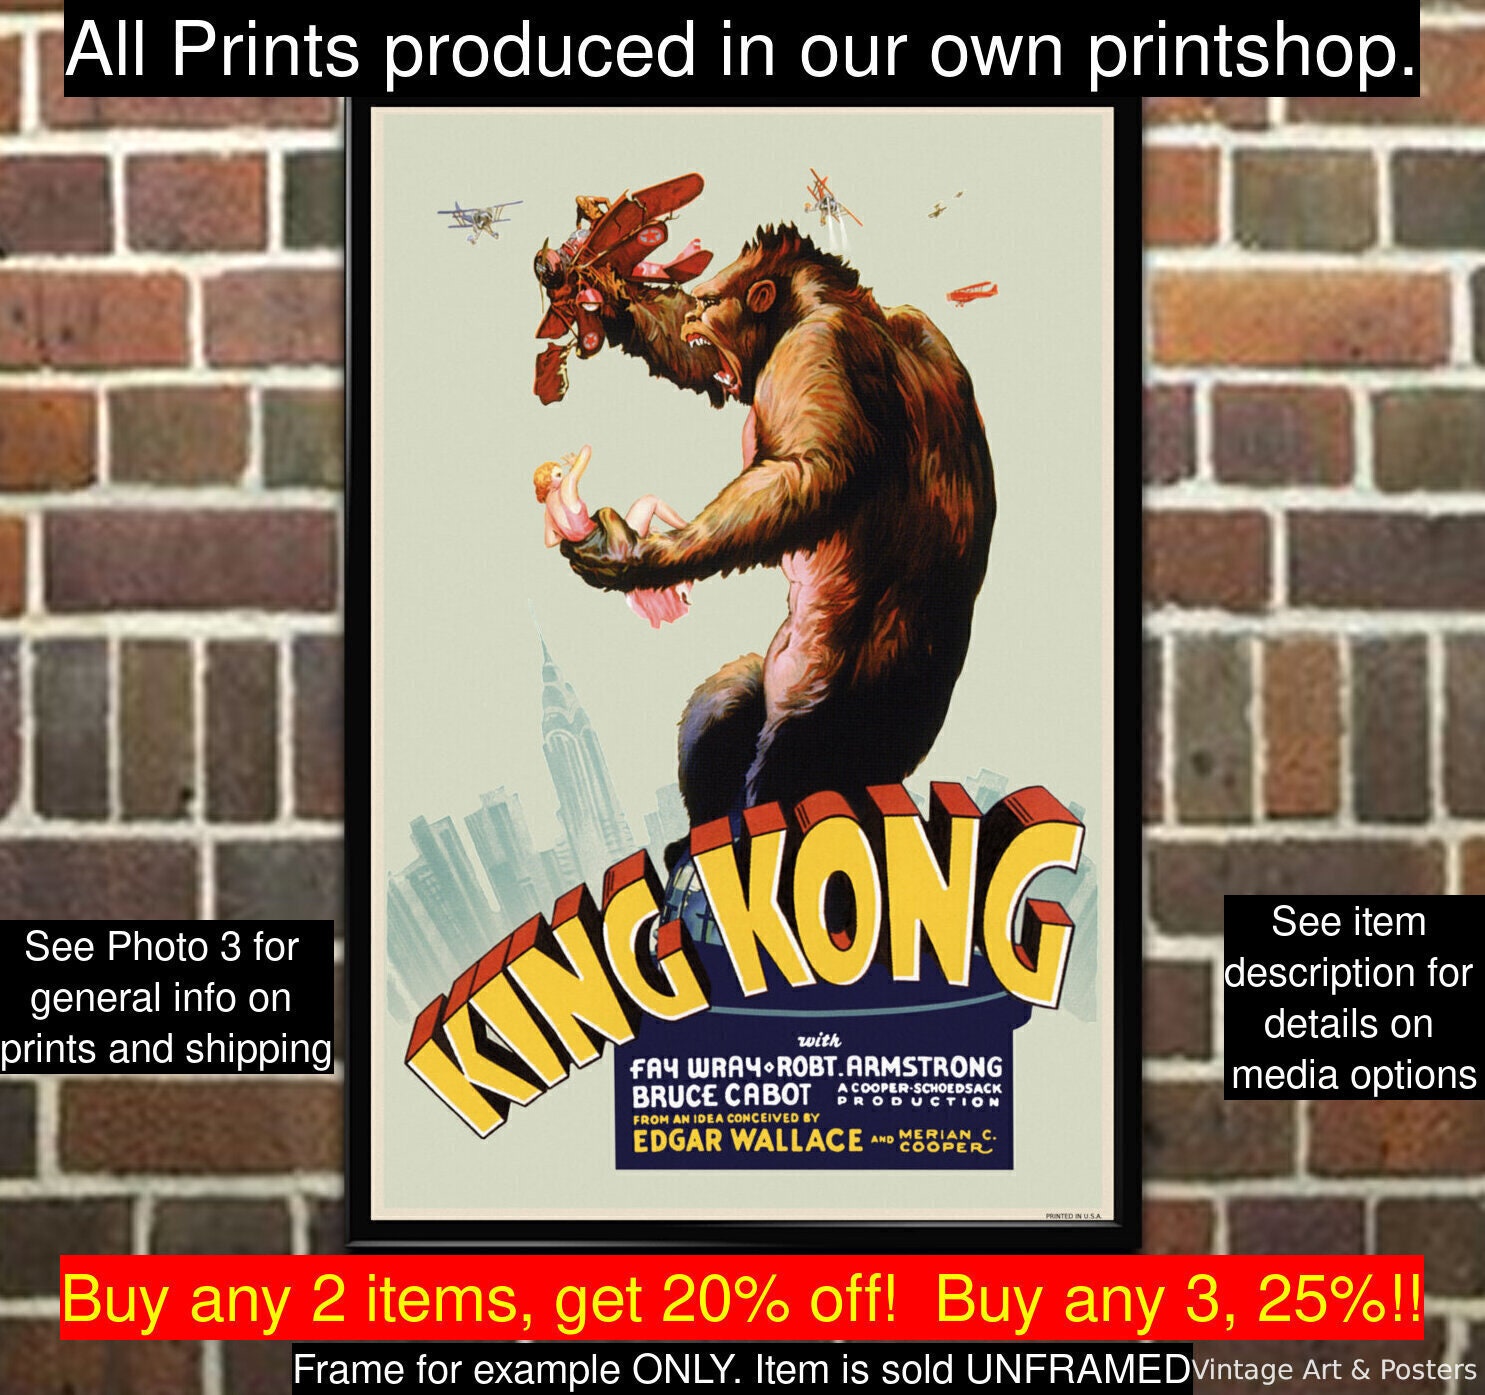 Buy King Kong